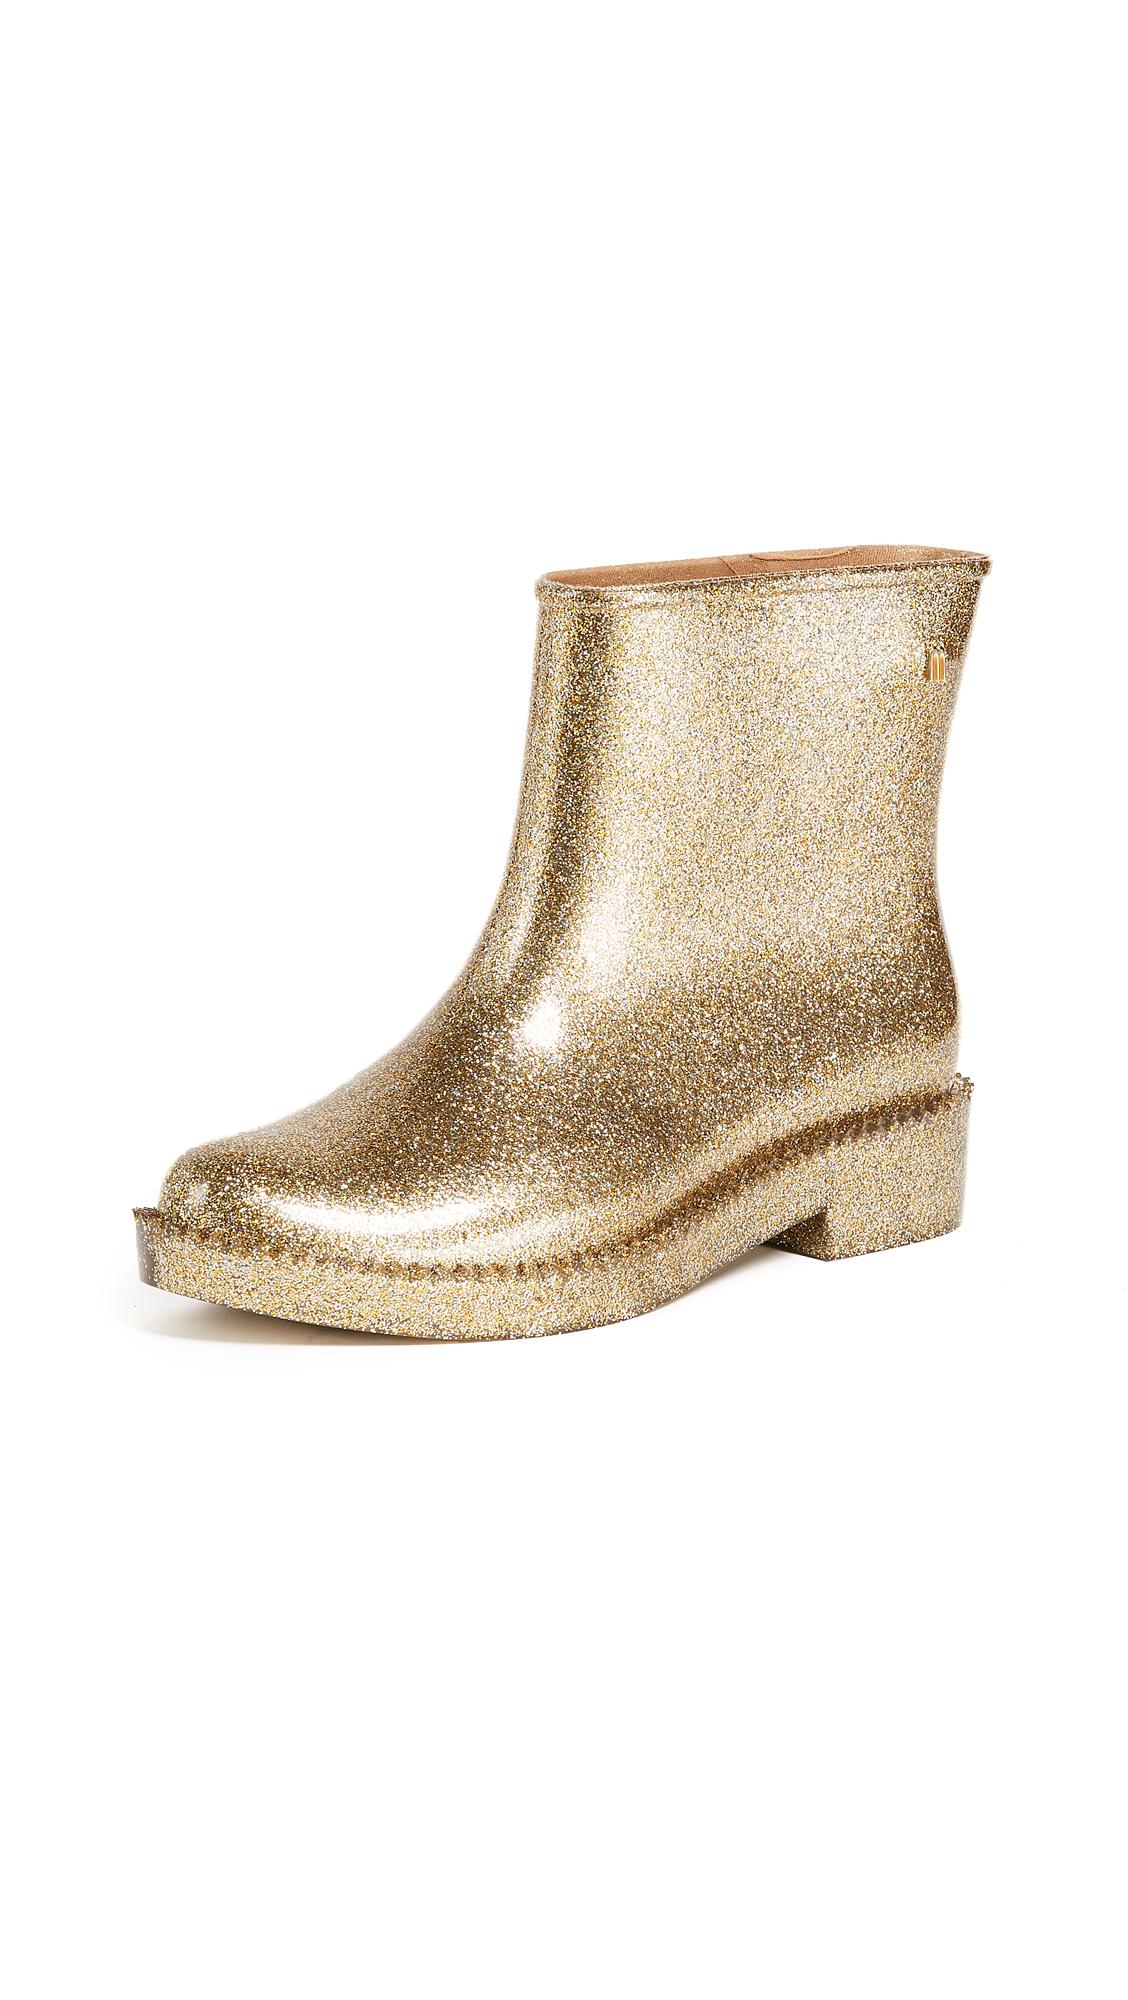 Melissa Drop Rain Boots in Metallic | Lyst